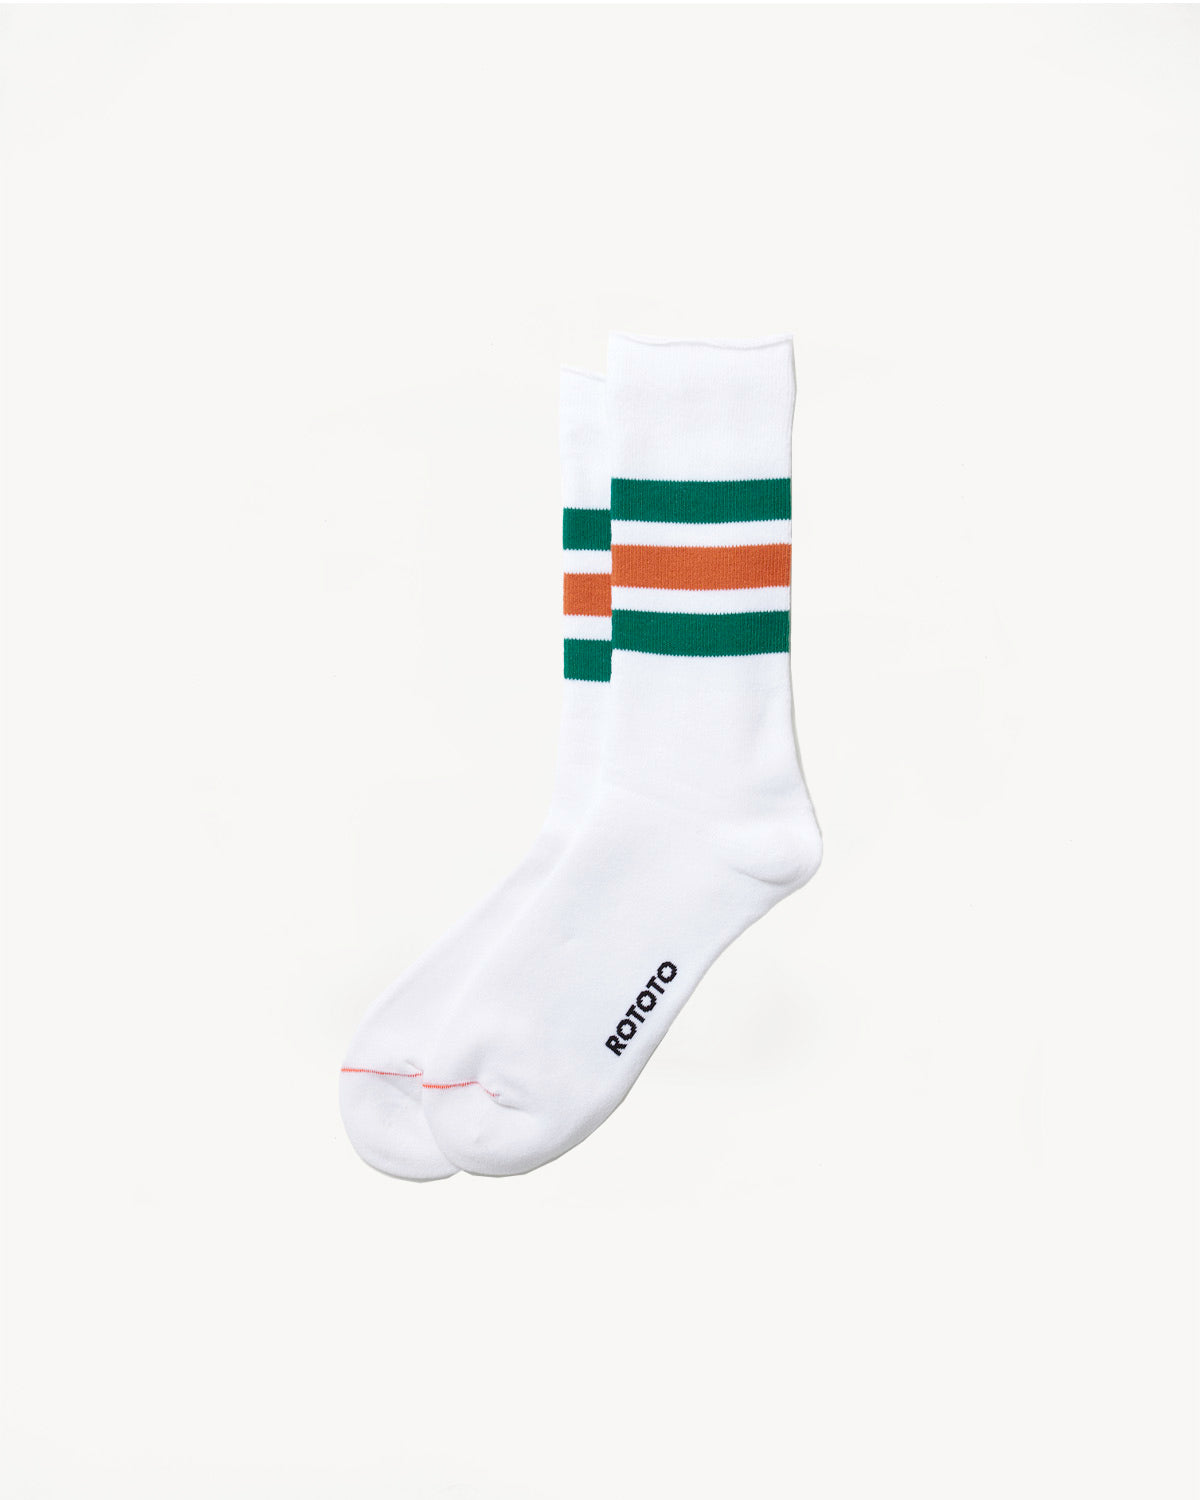 R1399 - Fine Pile Striped Crew Socks - White, Green, Dark Orange